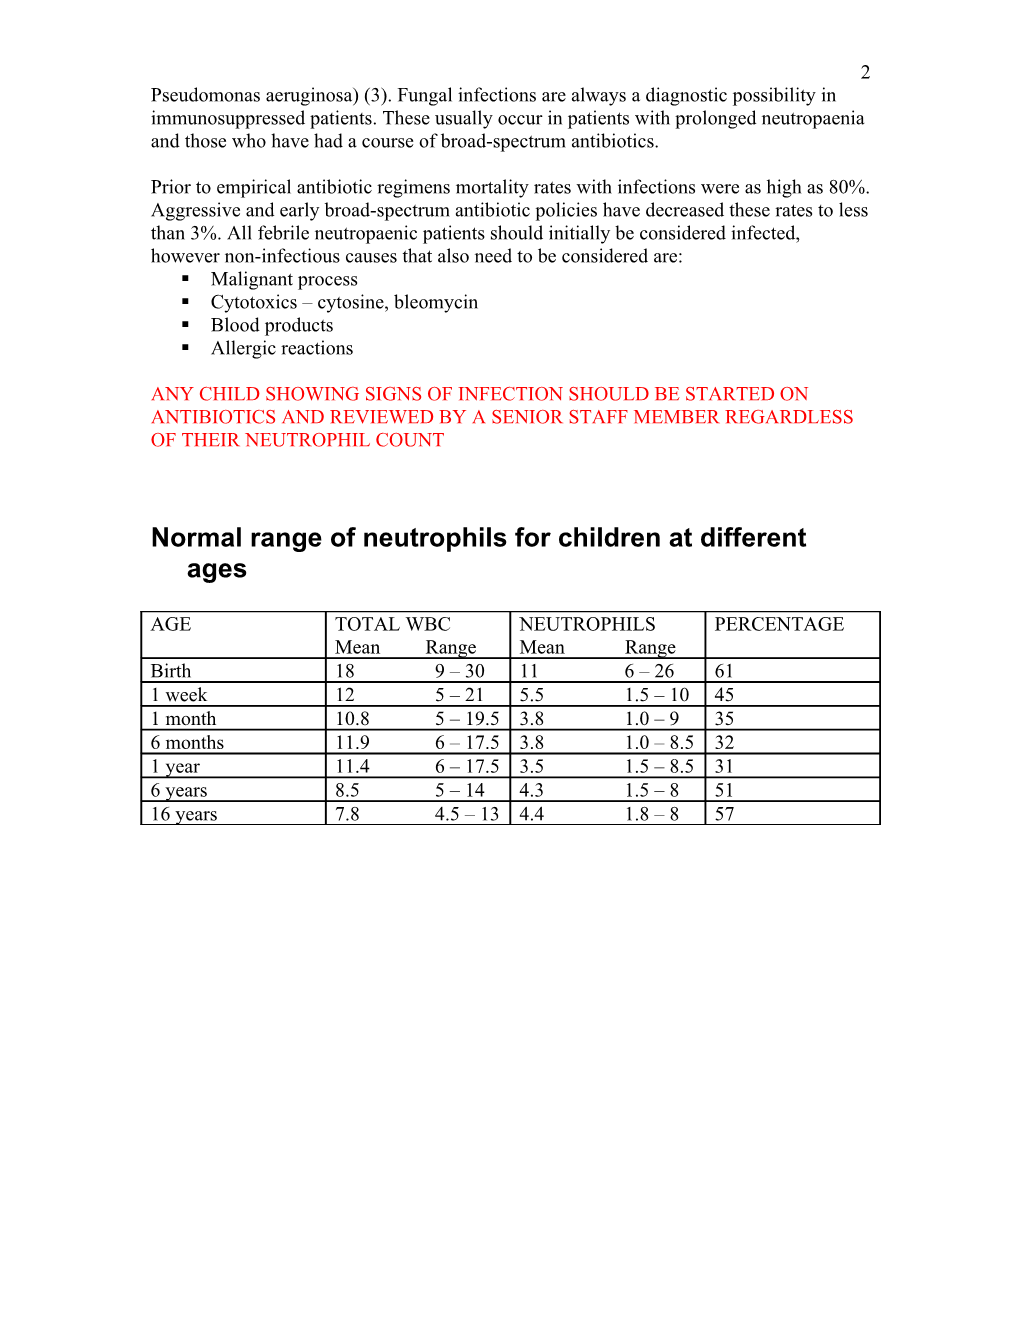 Management of Febrile Neutropenic Children